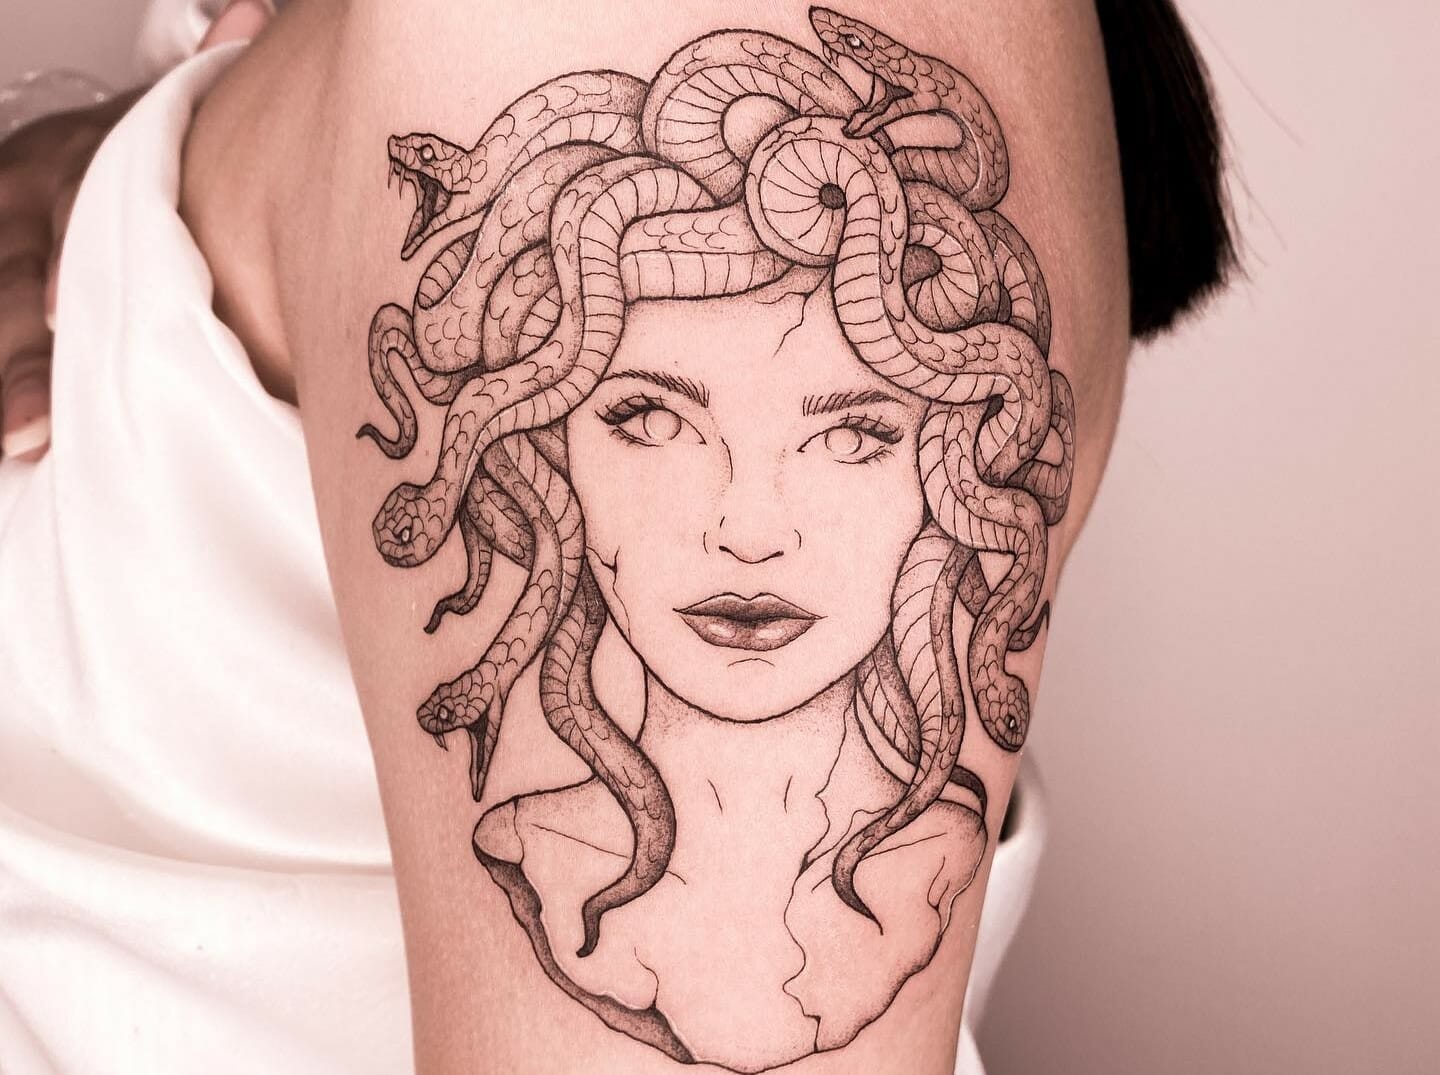 Medusa tattoo  Done by Vladimir at Blackbear Ink Eindhoven The  Netherlands  rtattoos